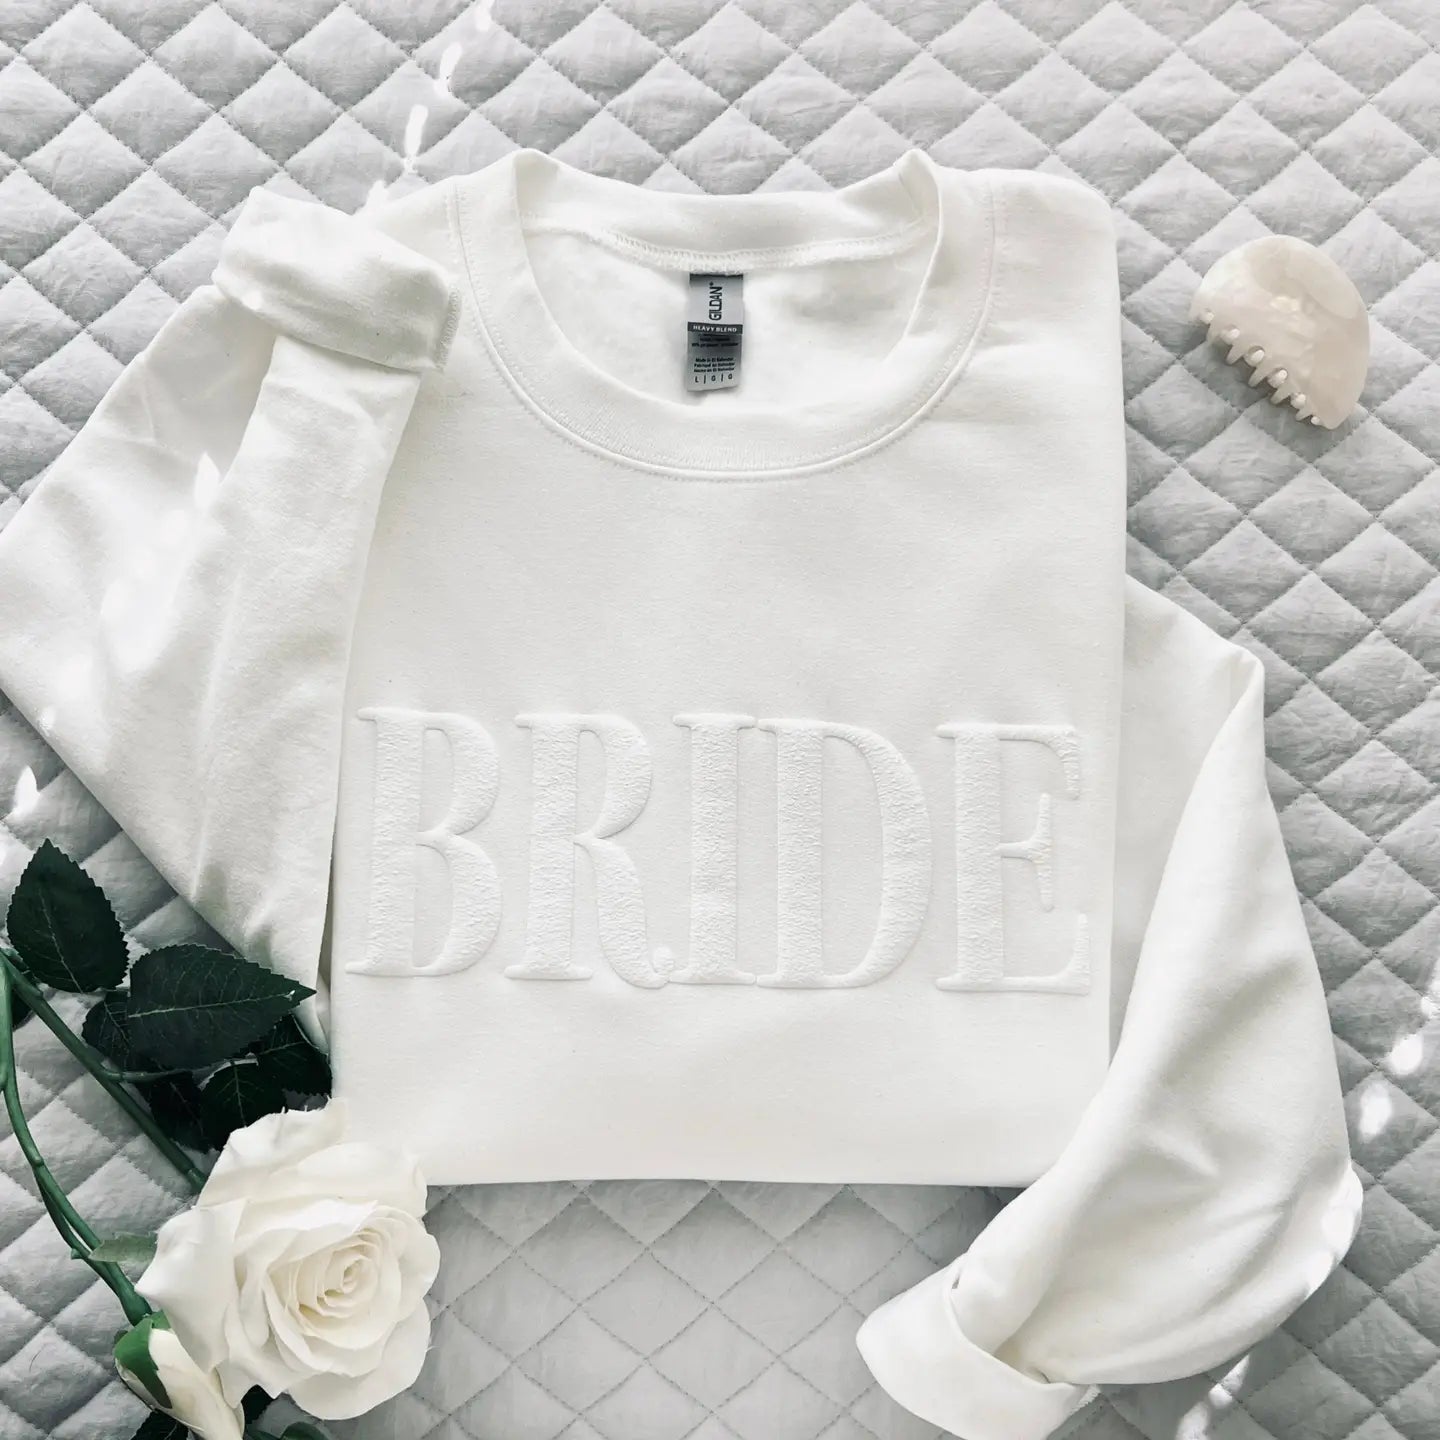 Bride To Be Sweatshirt